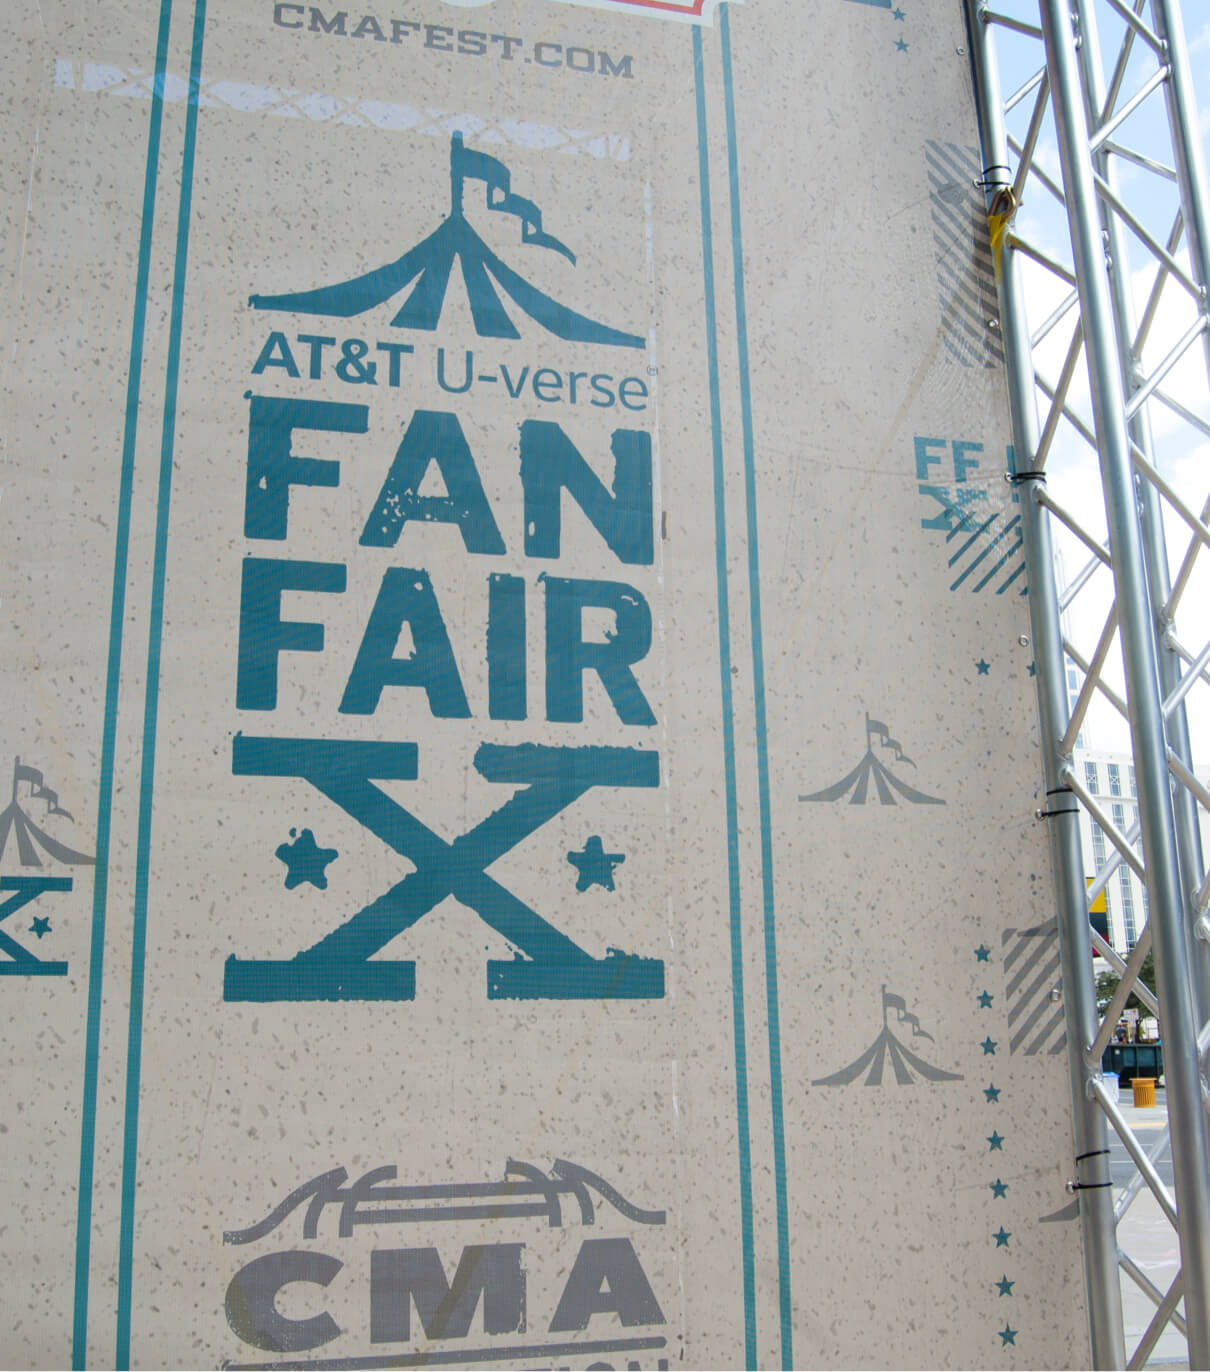 Fan Fair X signage ST8MNT BRAND AGENCY